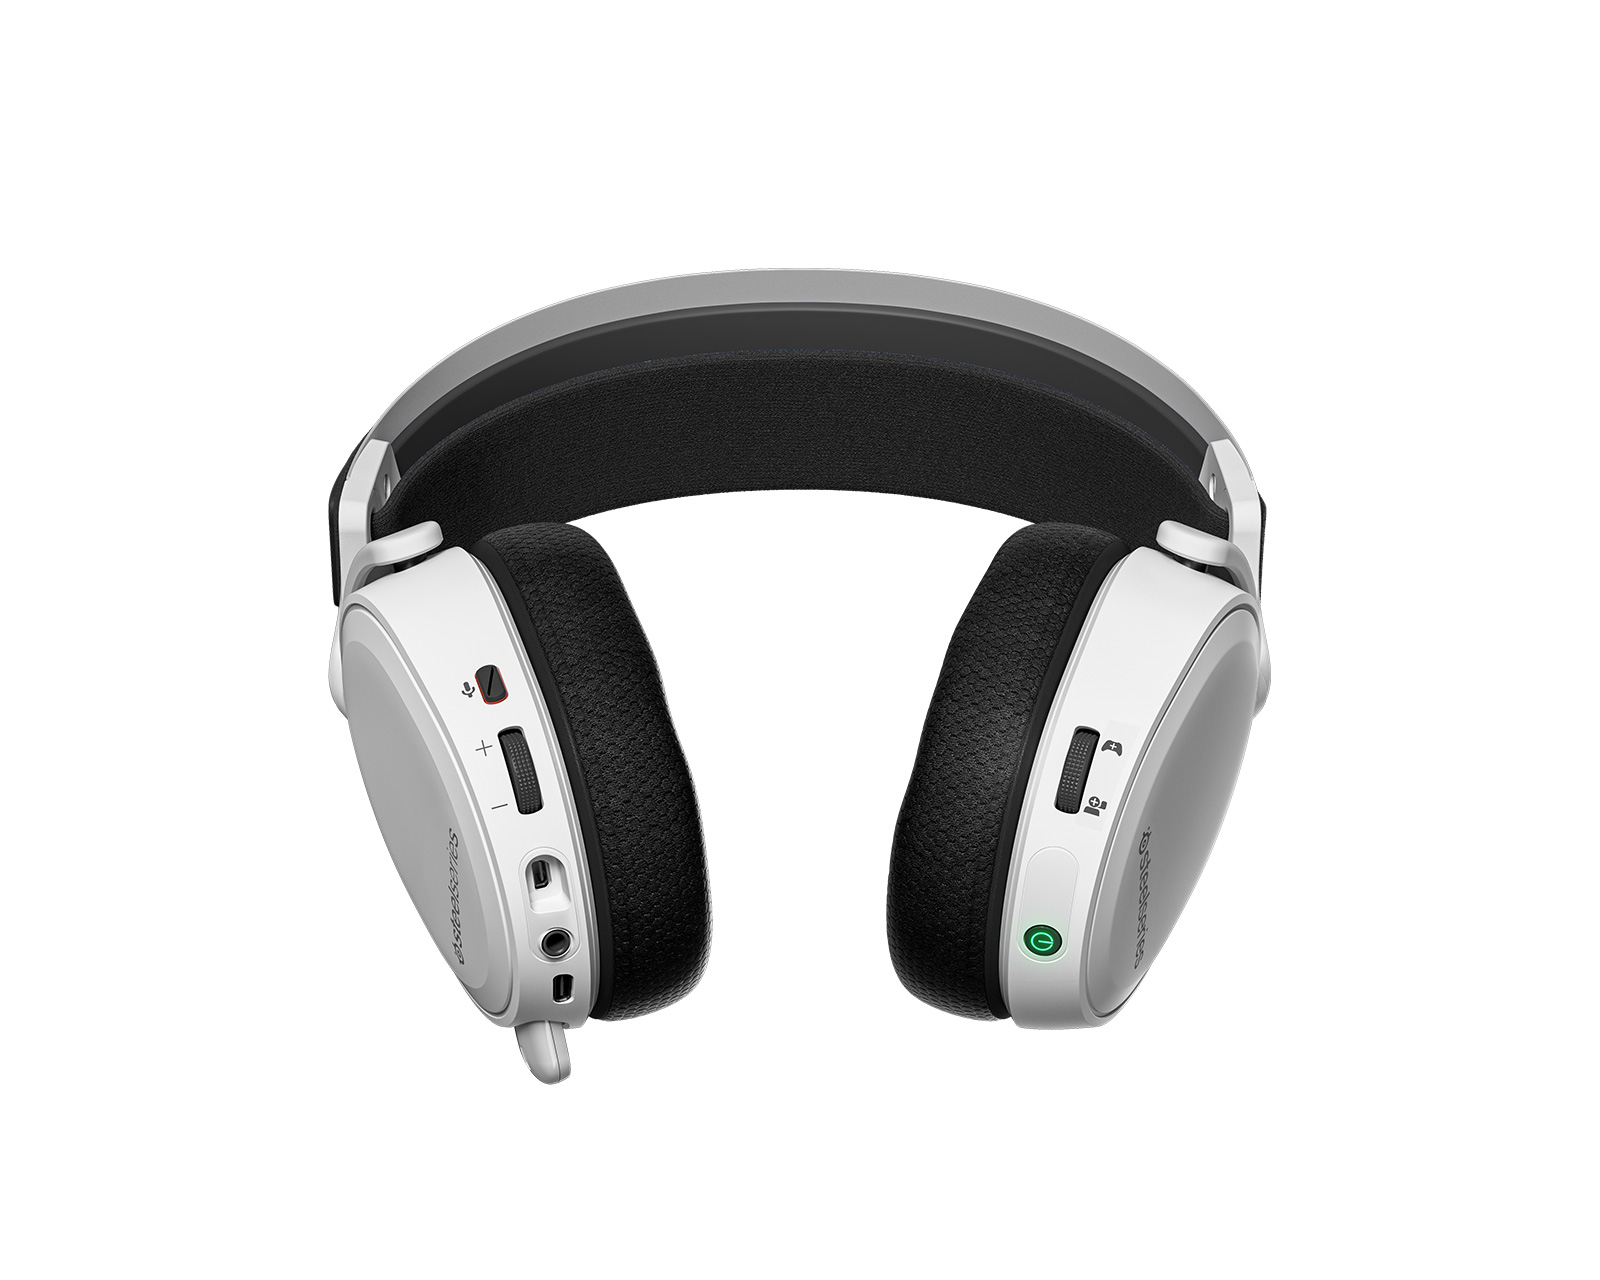 SteelSeries Arctis 7 Plus Wireless Gaming Headset